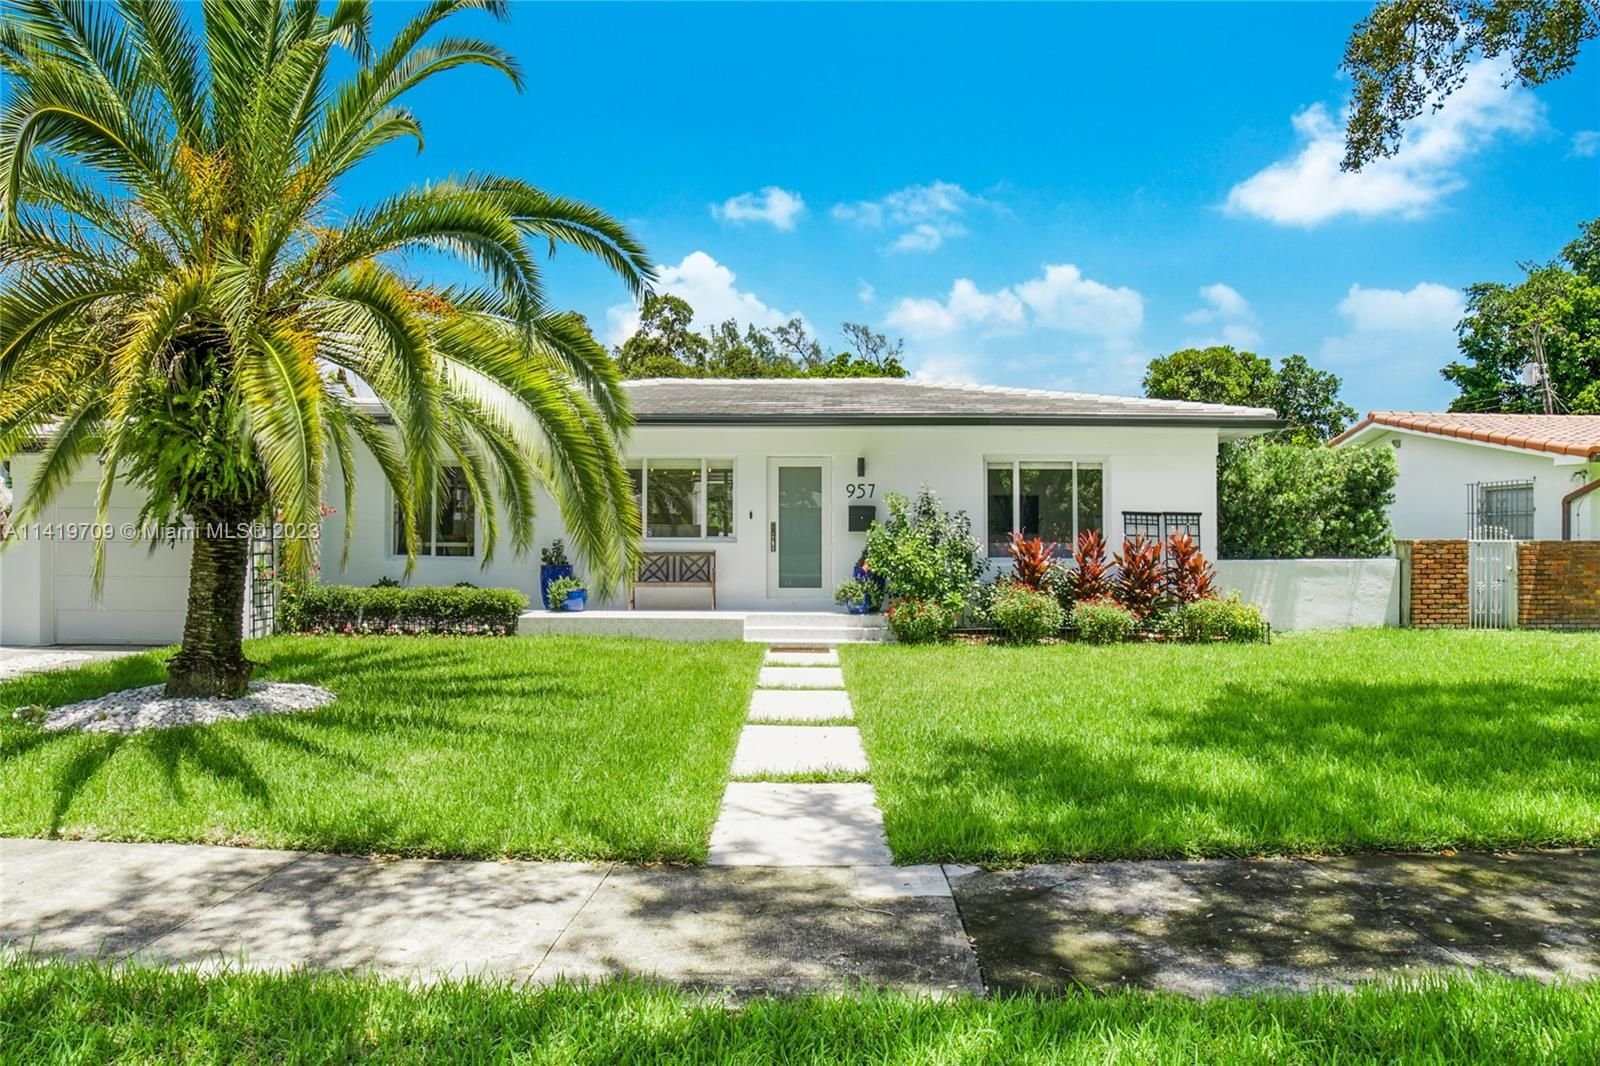 Real estate property located at 957 99th St, Miami-Dade County, Miami Shores, FL